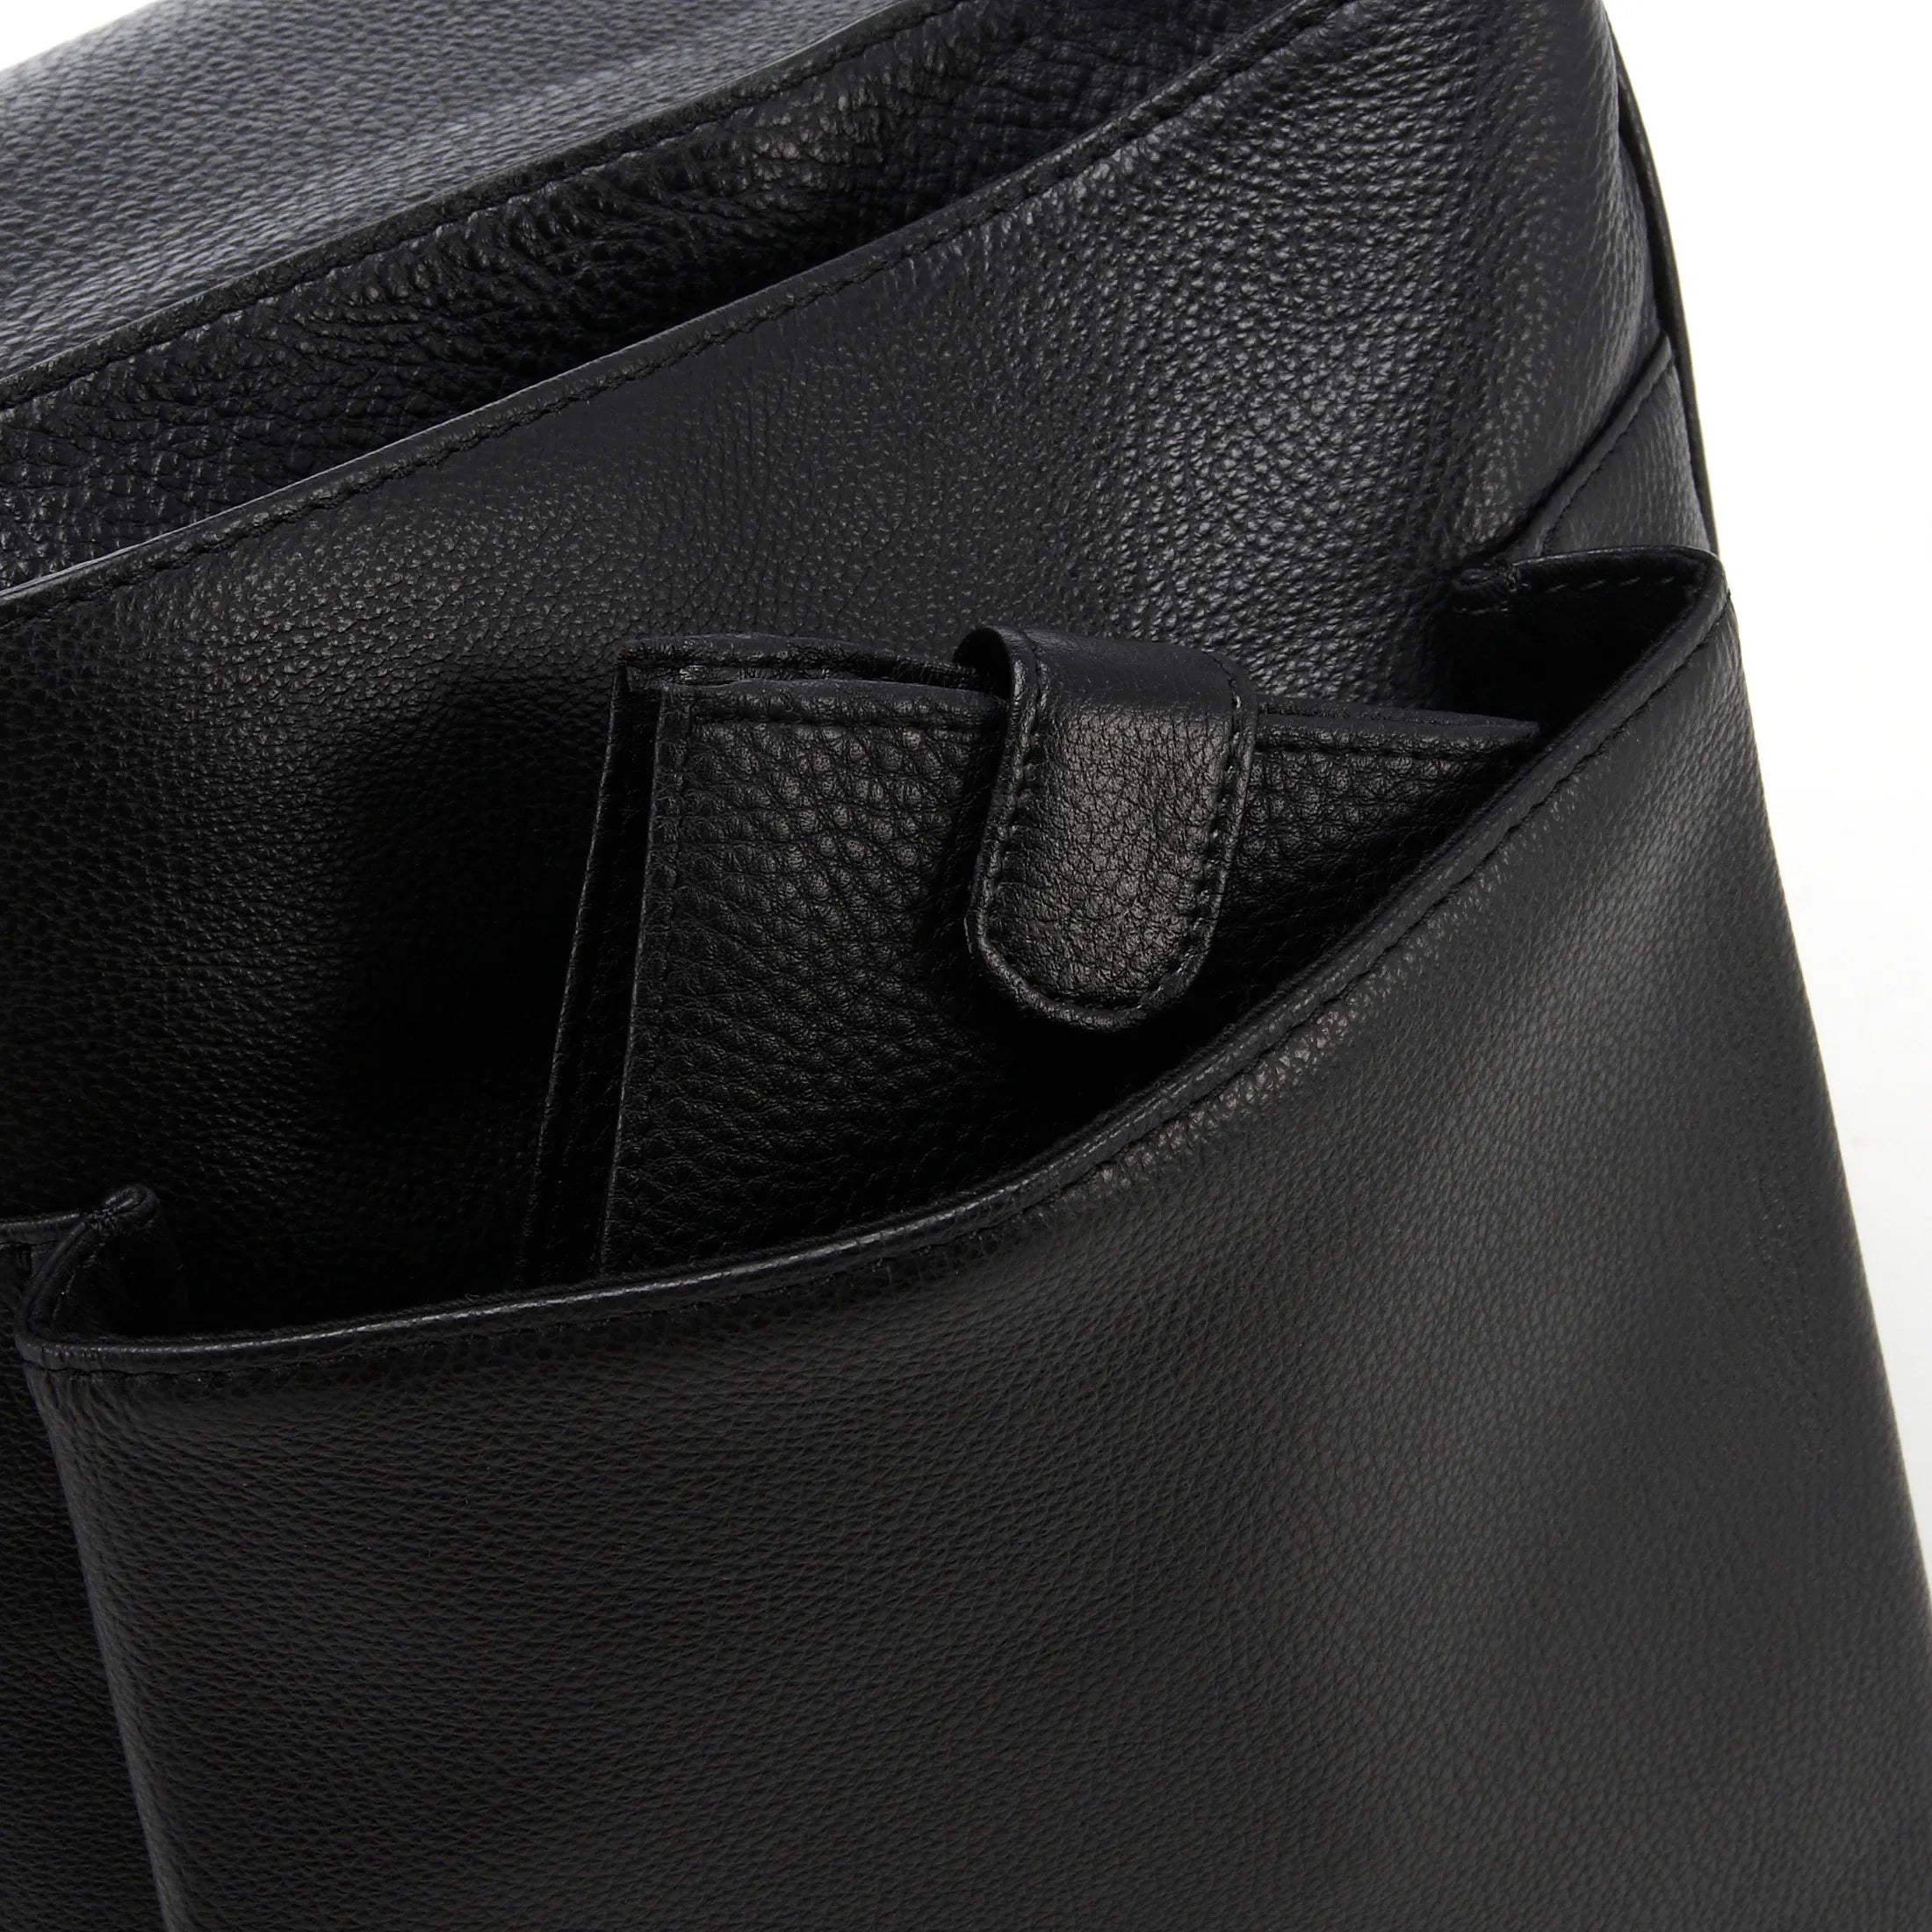 Otto Kern Romance leather shoulder bag 32 cm - dark brown